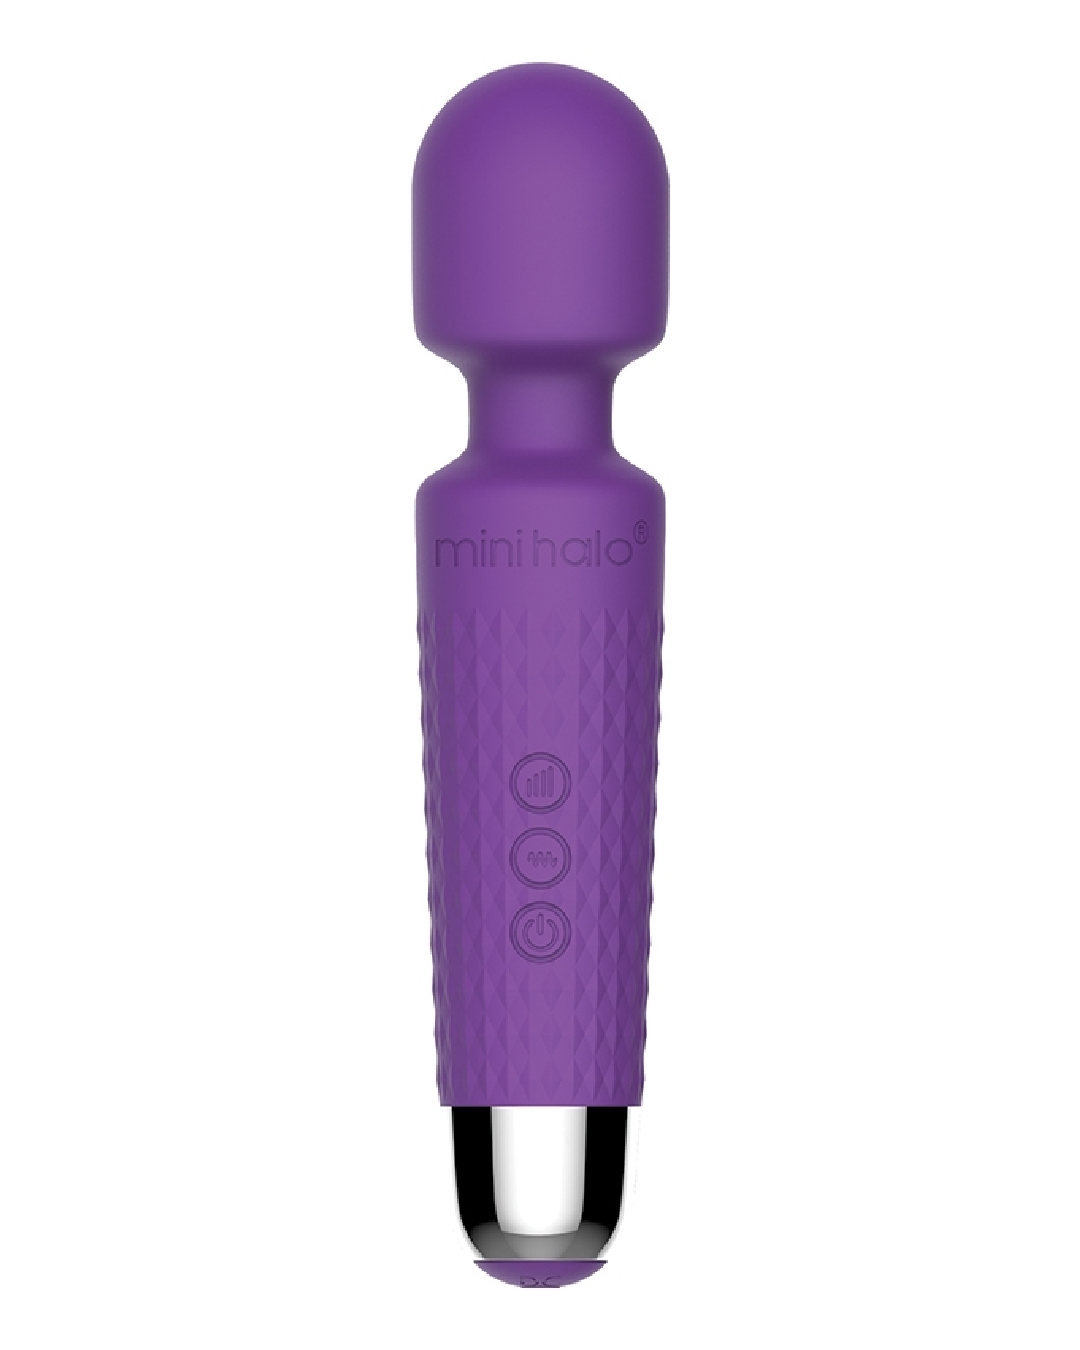 Mini Halo Extra Powerful Wand Vibrator - Purple 